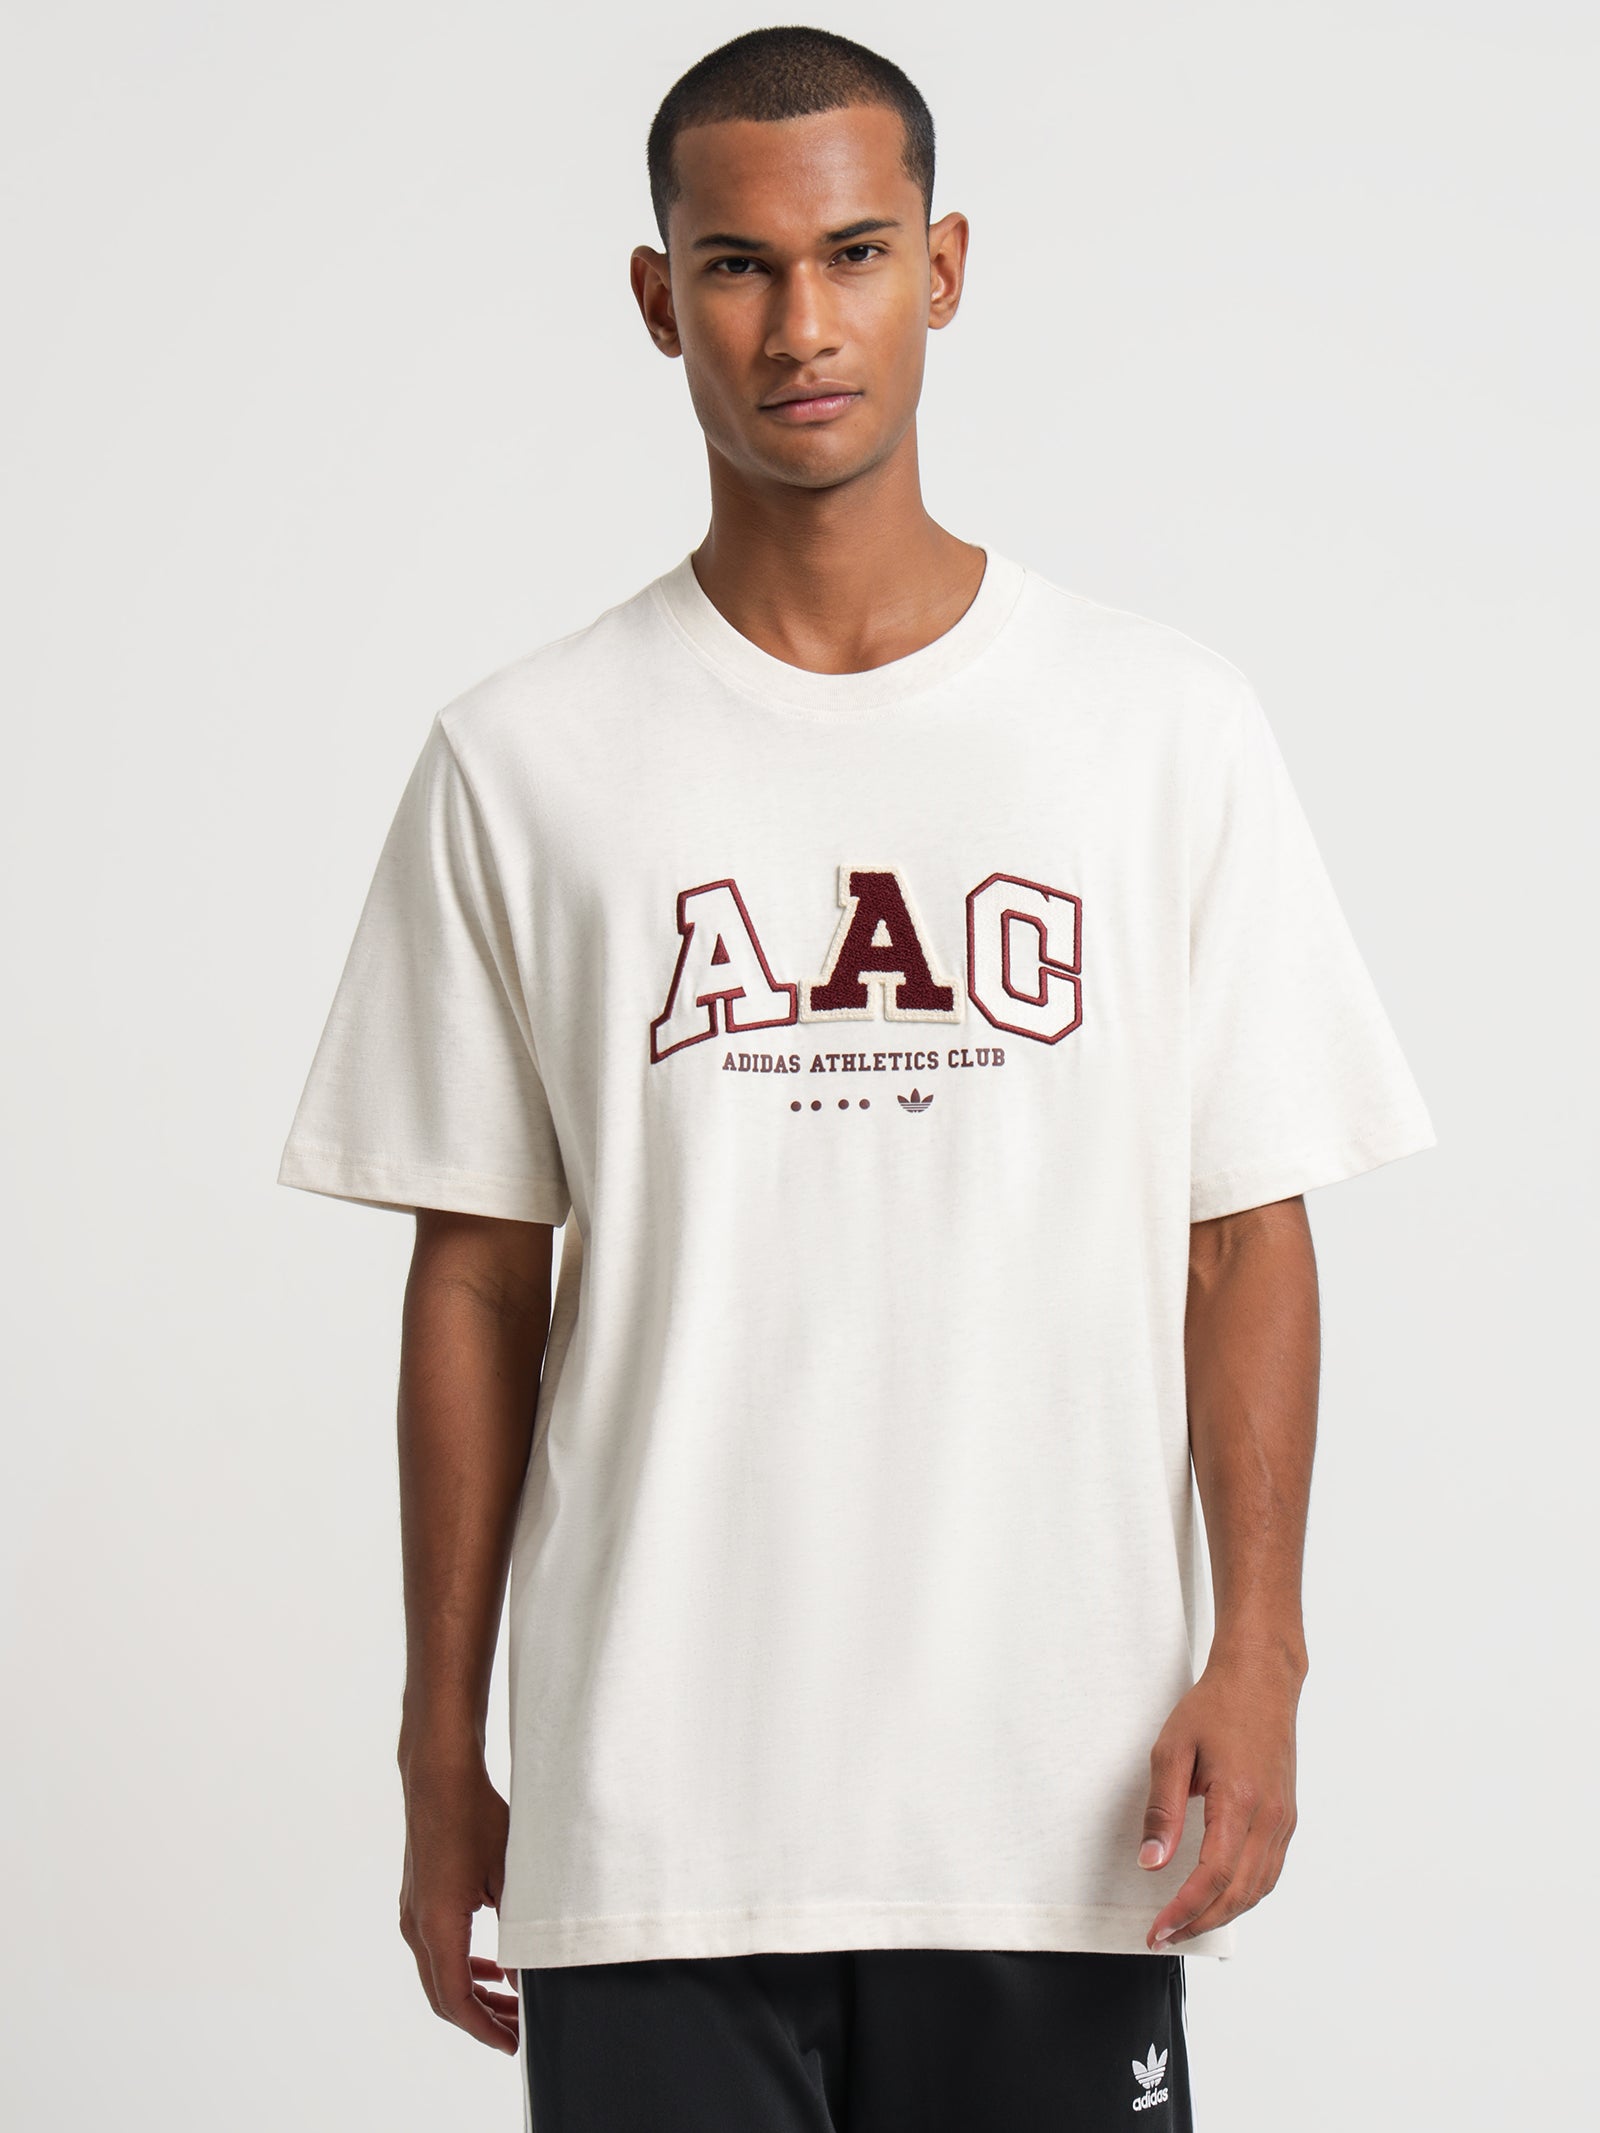 Rifta Metro AAC T-Shirt in Wonder White - Glue Store